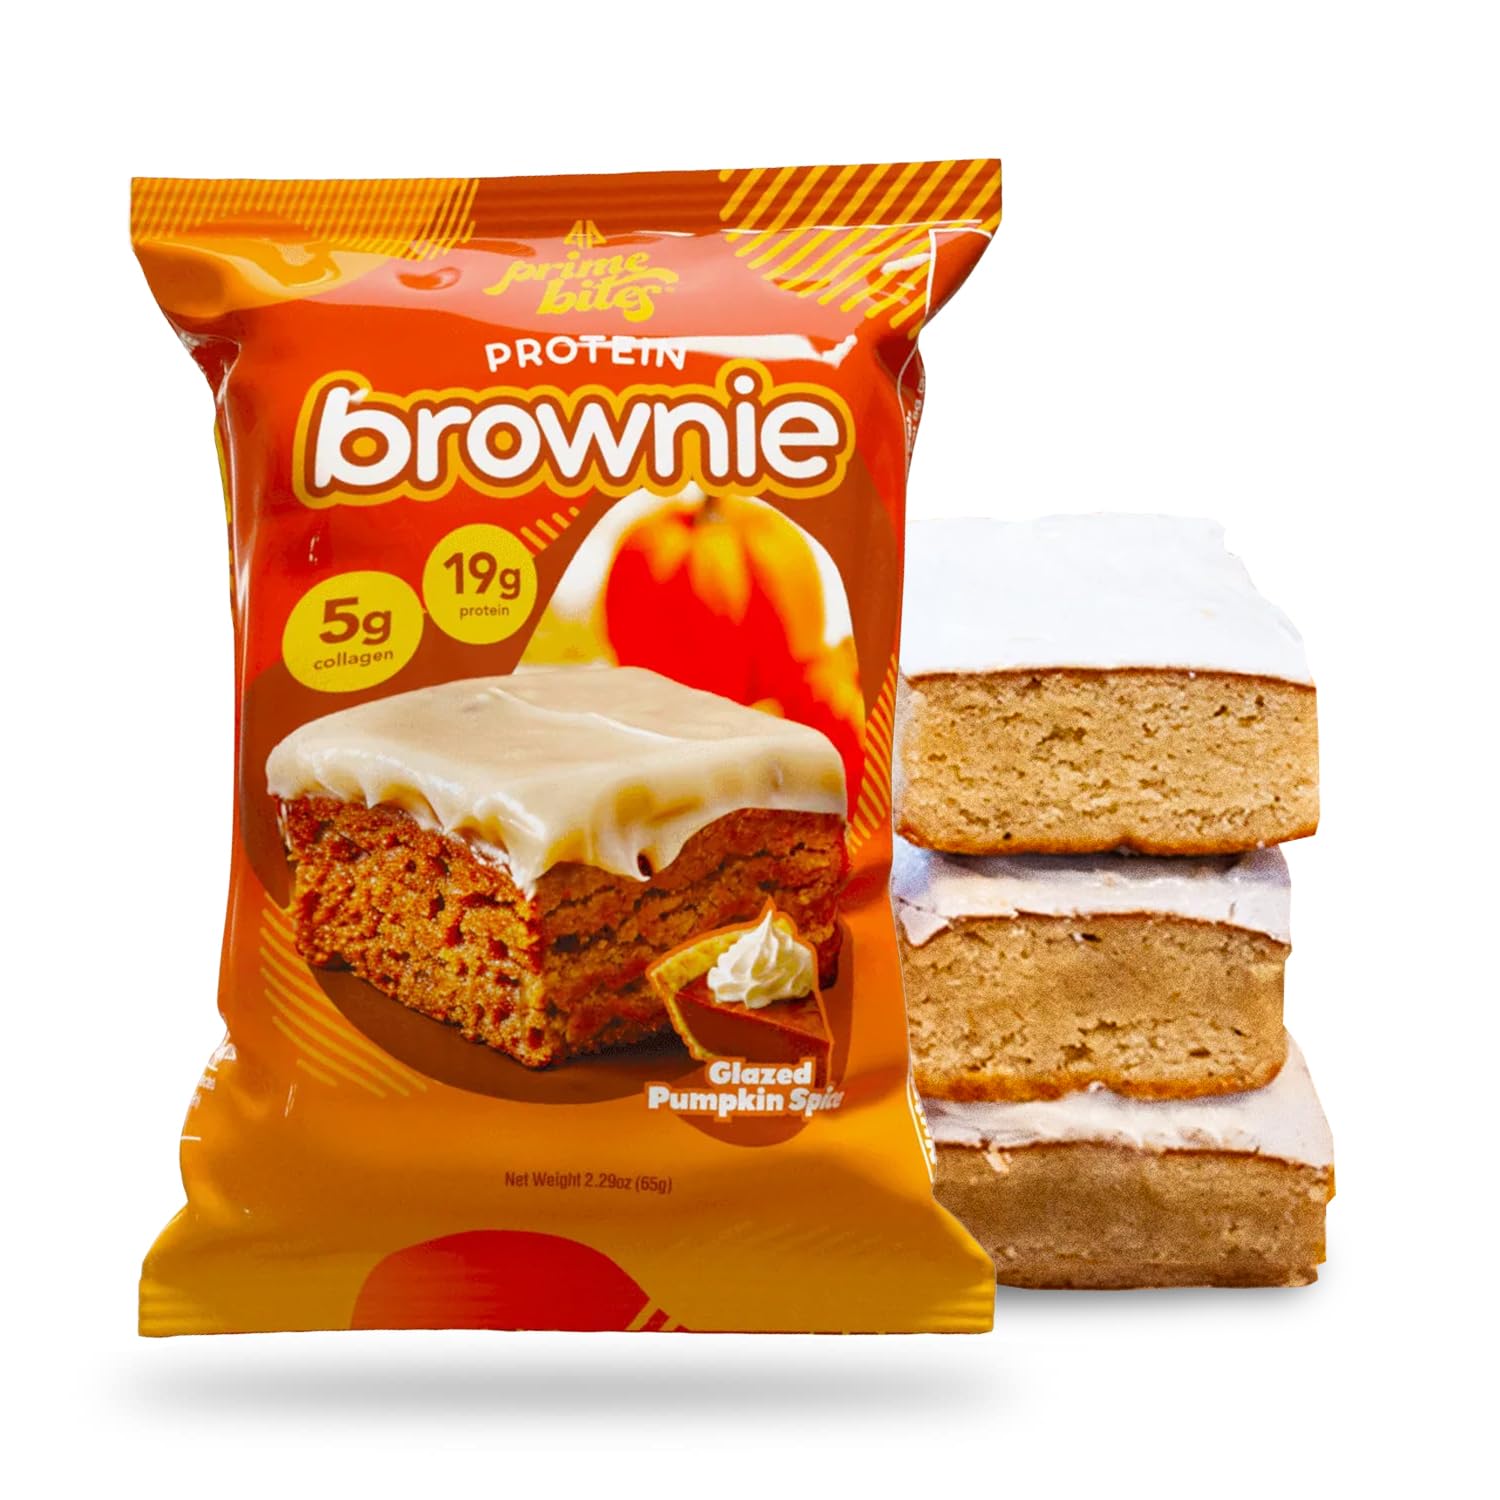 AP Prime Bites Protein Brownie 1 brownie Alpha Prime Top Nutrition Canada